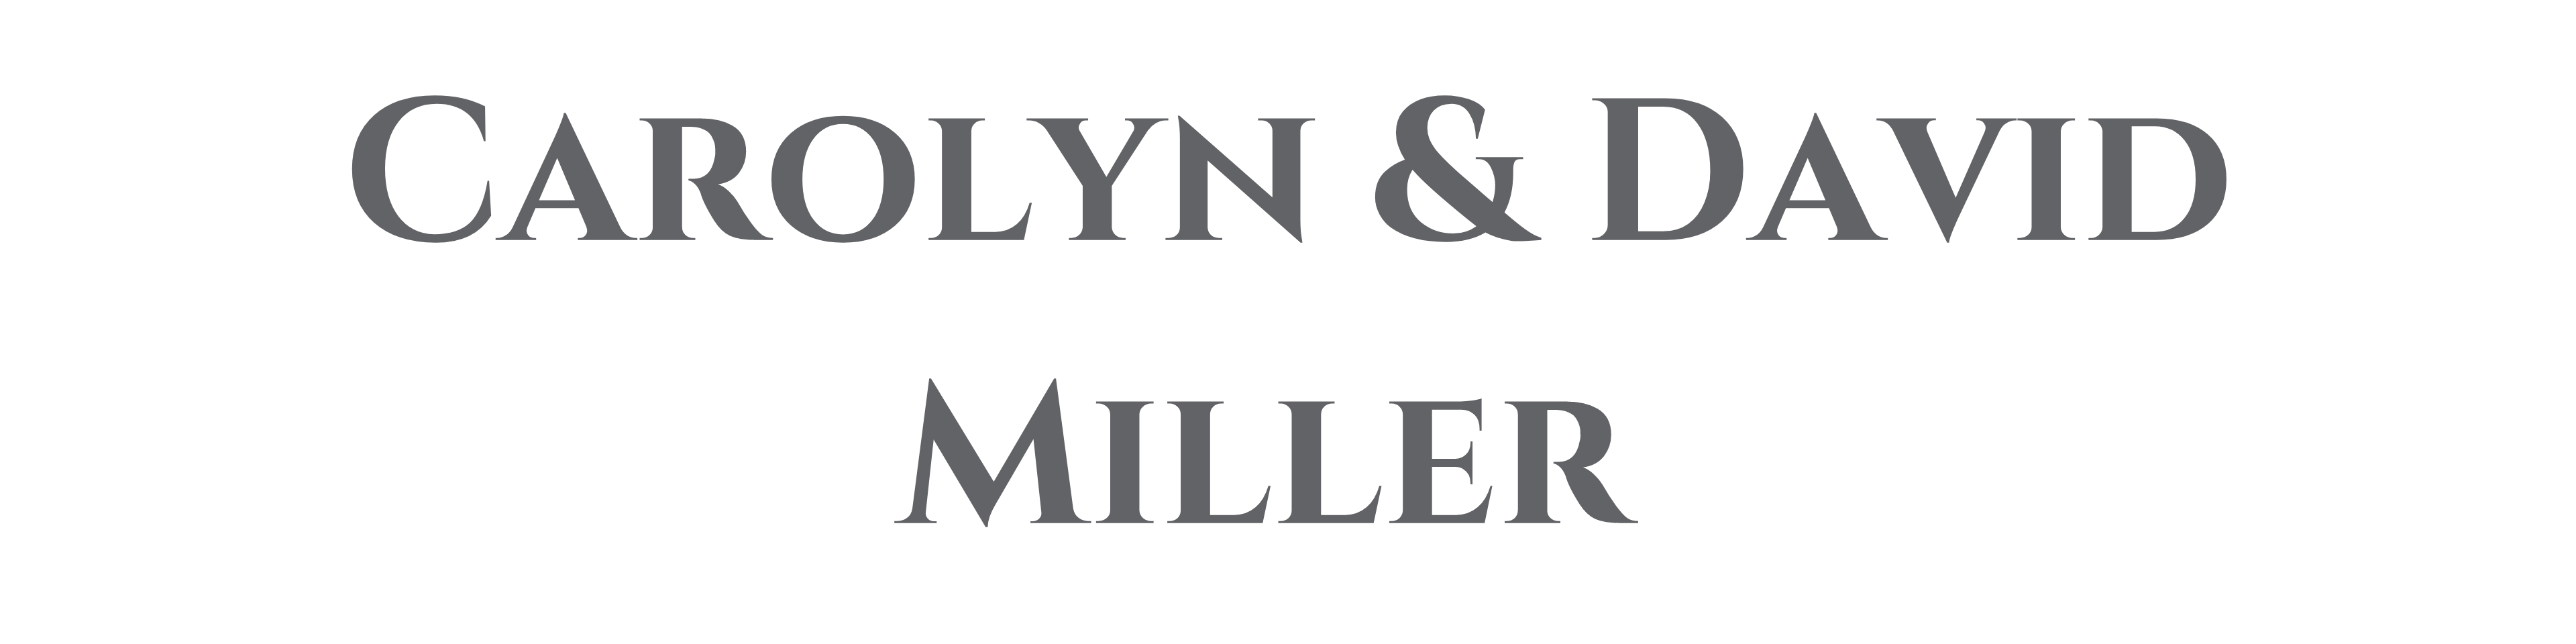 Carolyn & David Miller